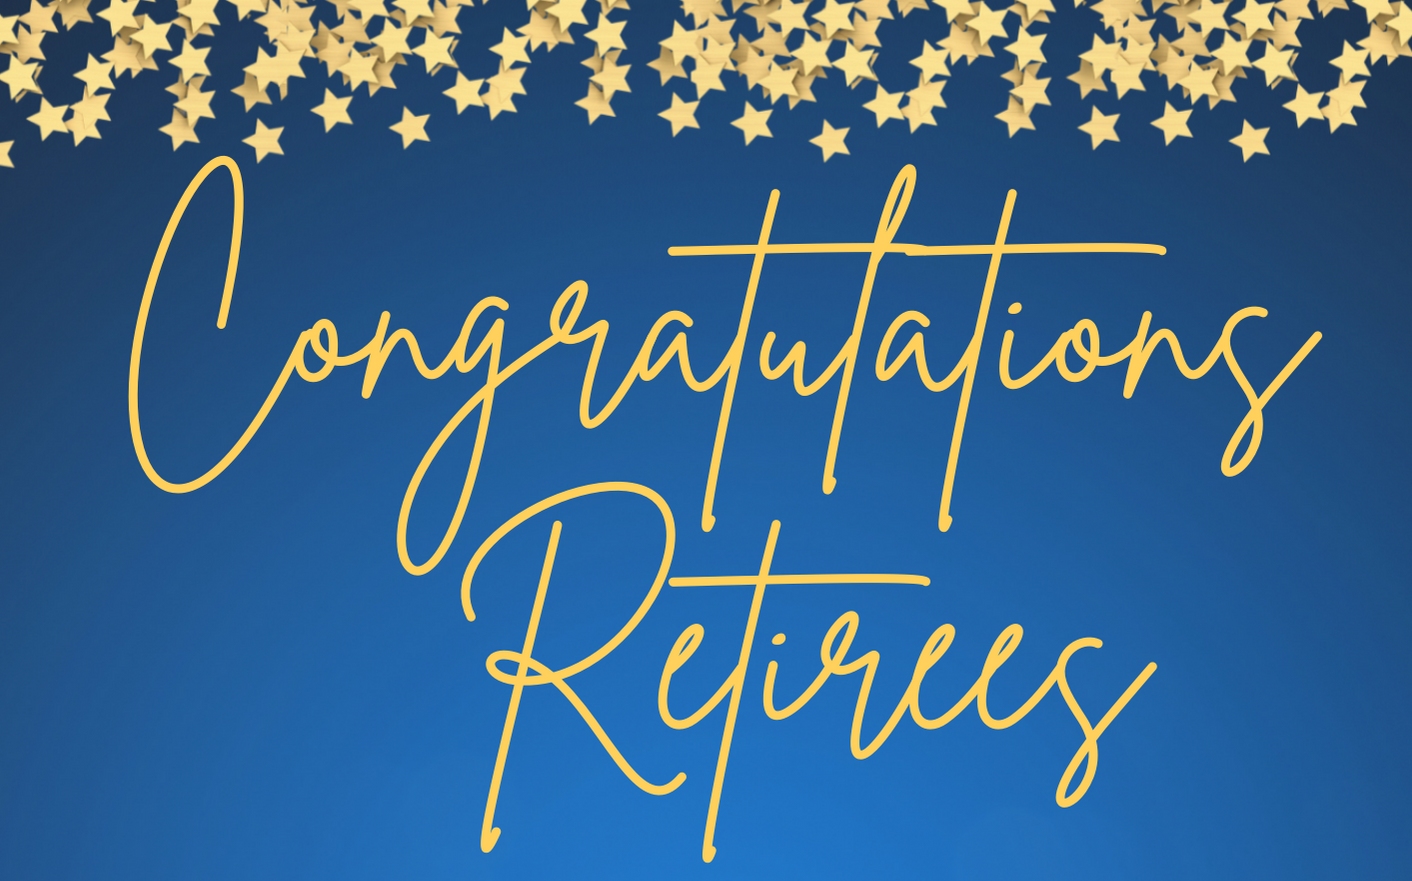 Congratulations Retirees!